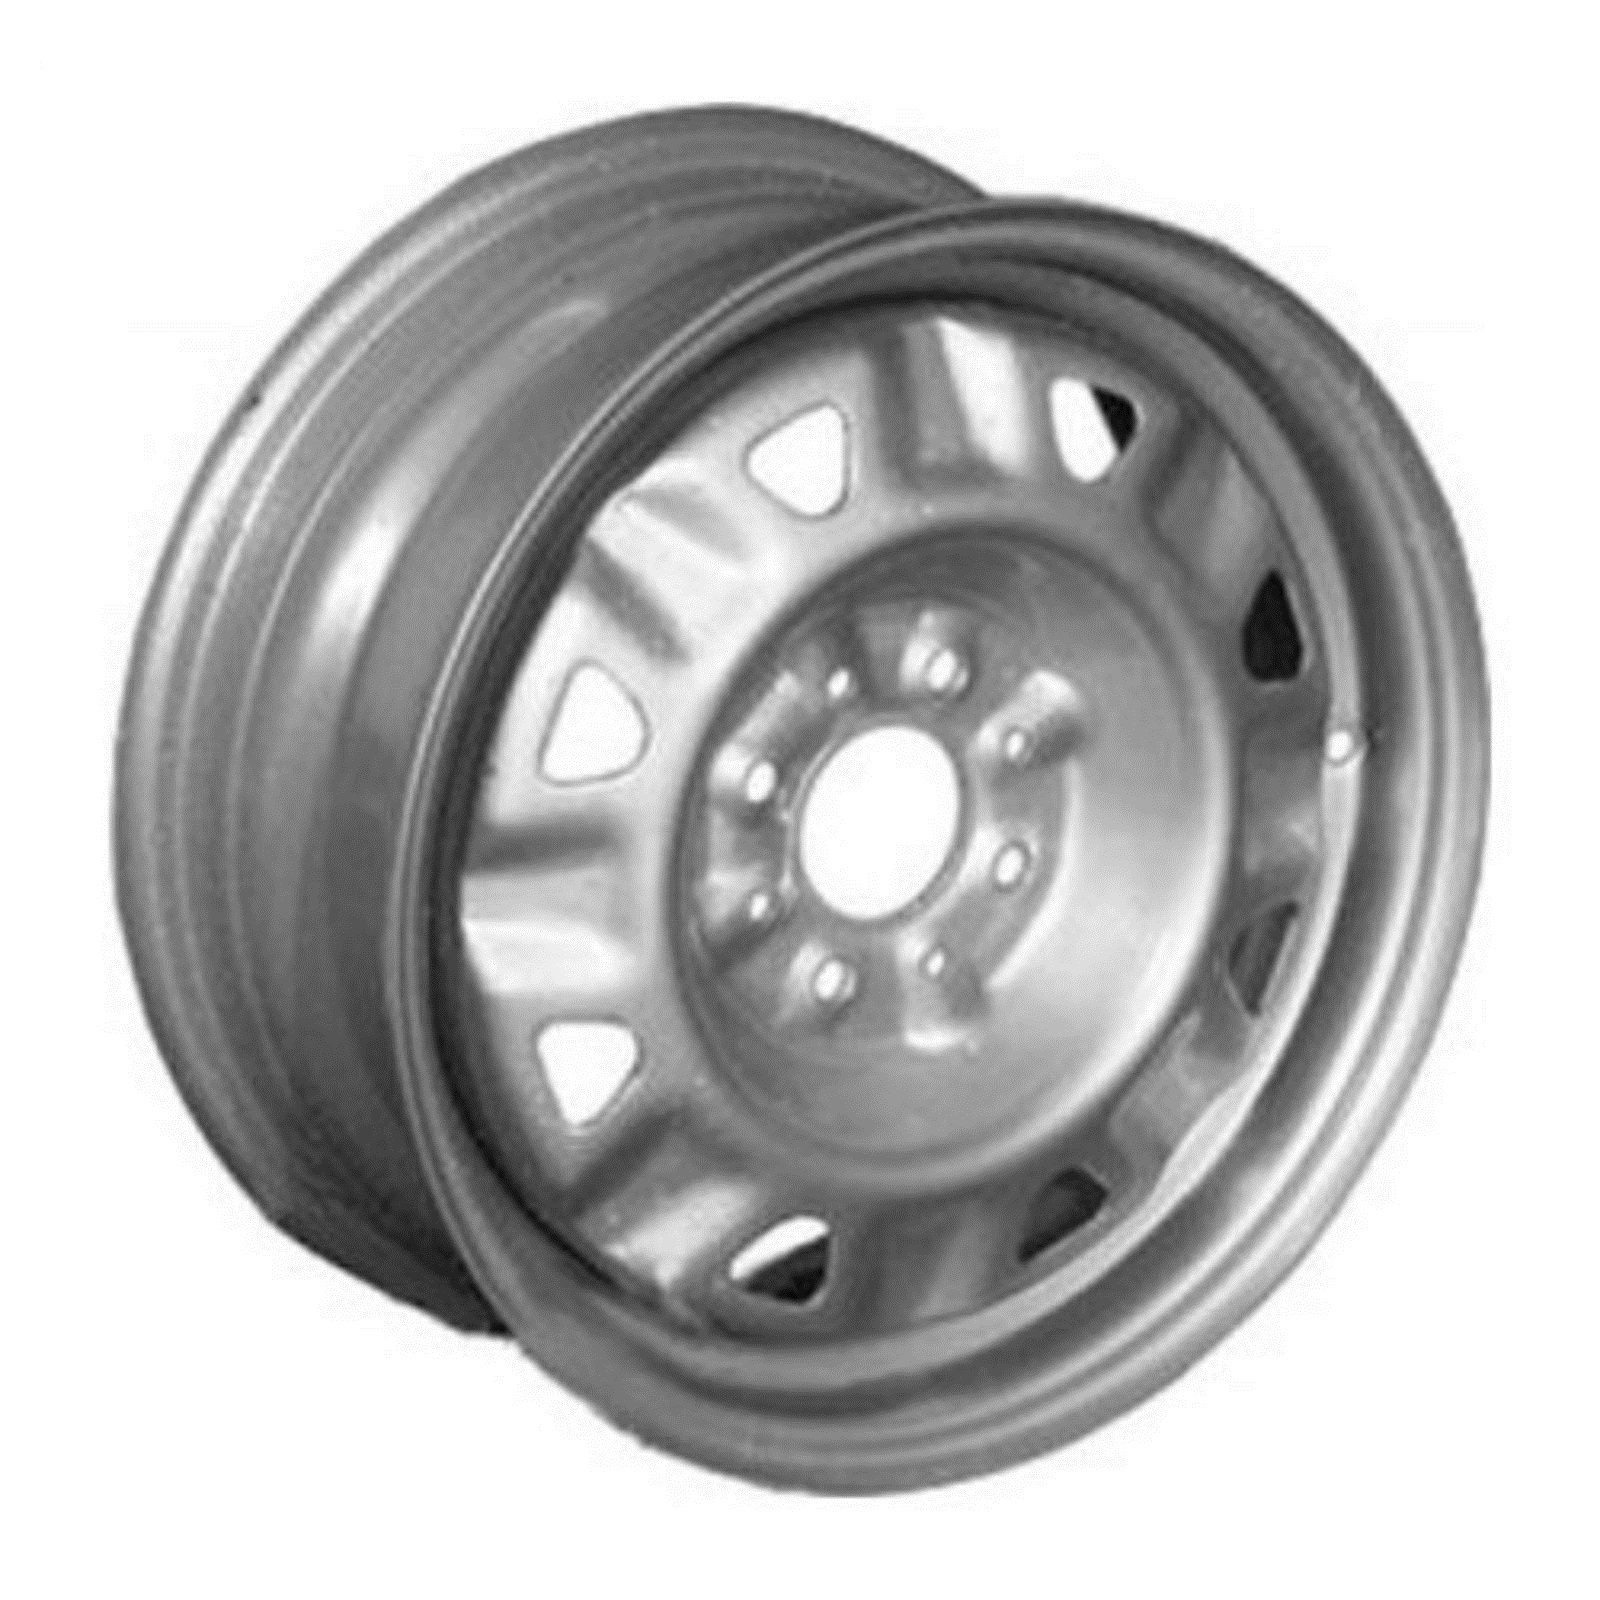 Gaz 102310101520 Wheel Steel Rim (Silver) GAZ 5.0x14 4x98 ET35 DIA58.6 102310101520